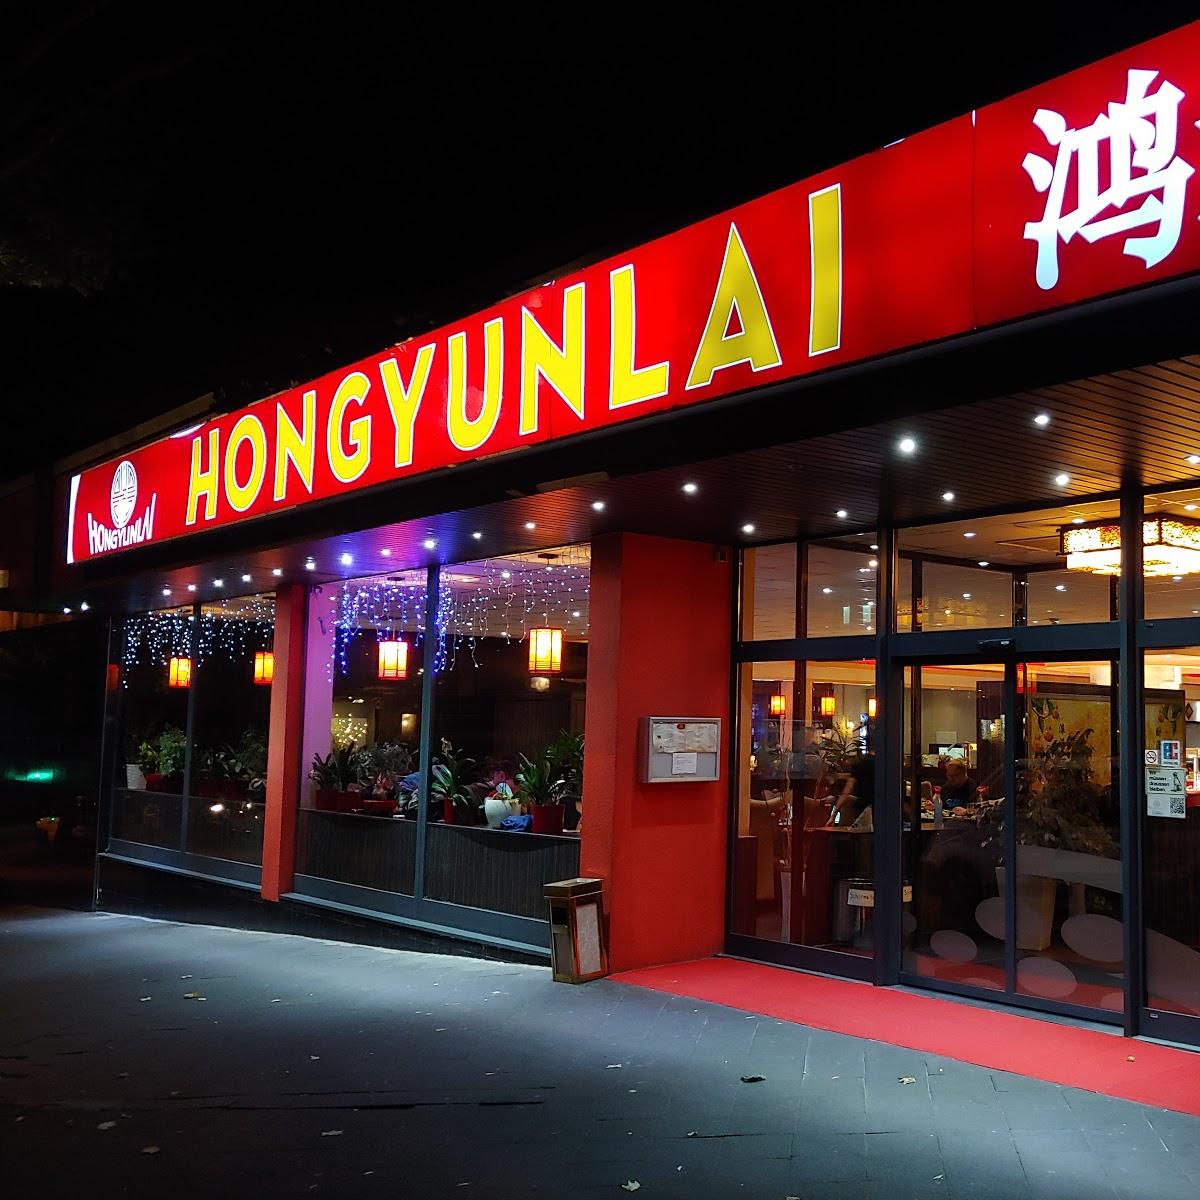 Restaurant "Hongyunlai" in Bochum